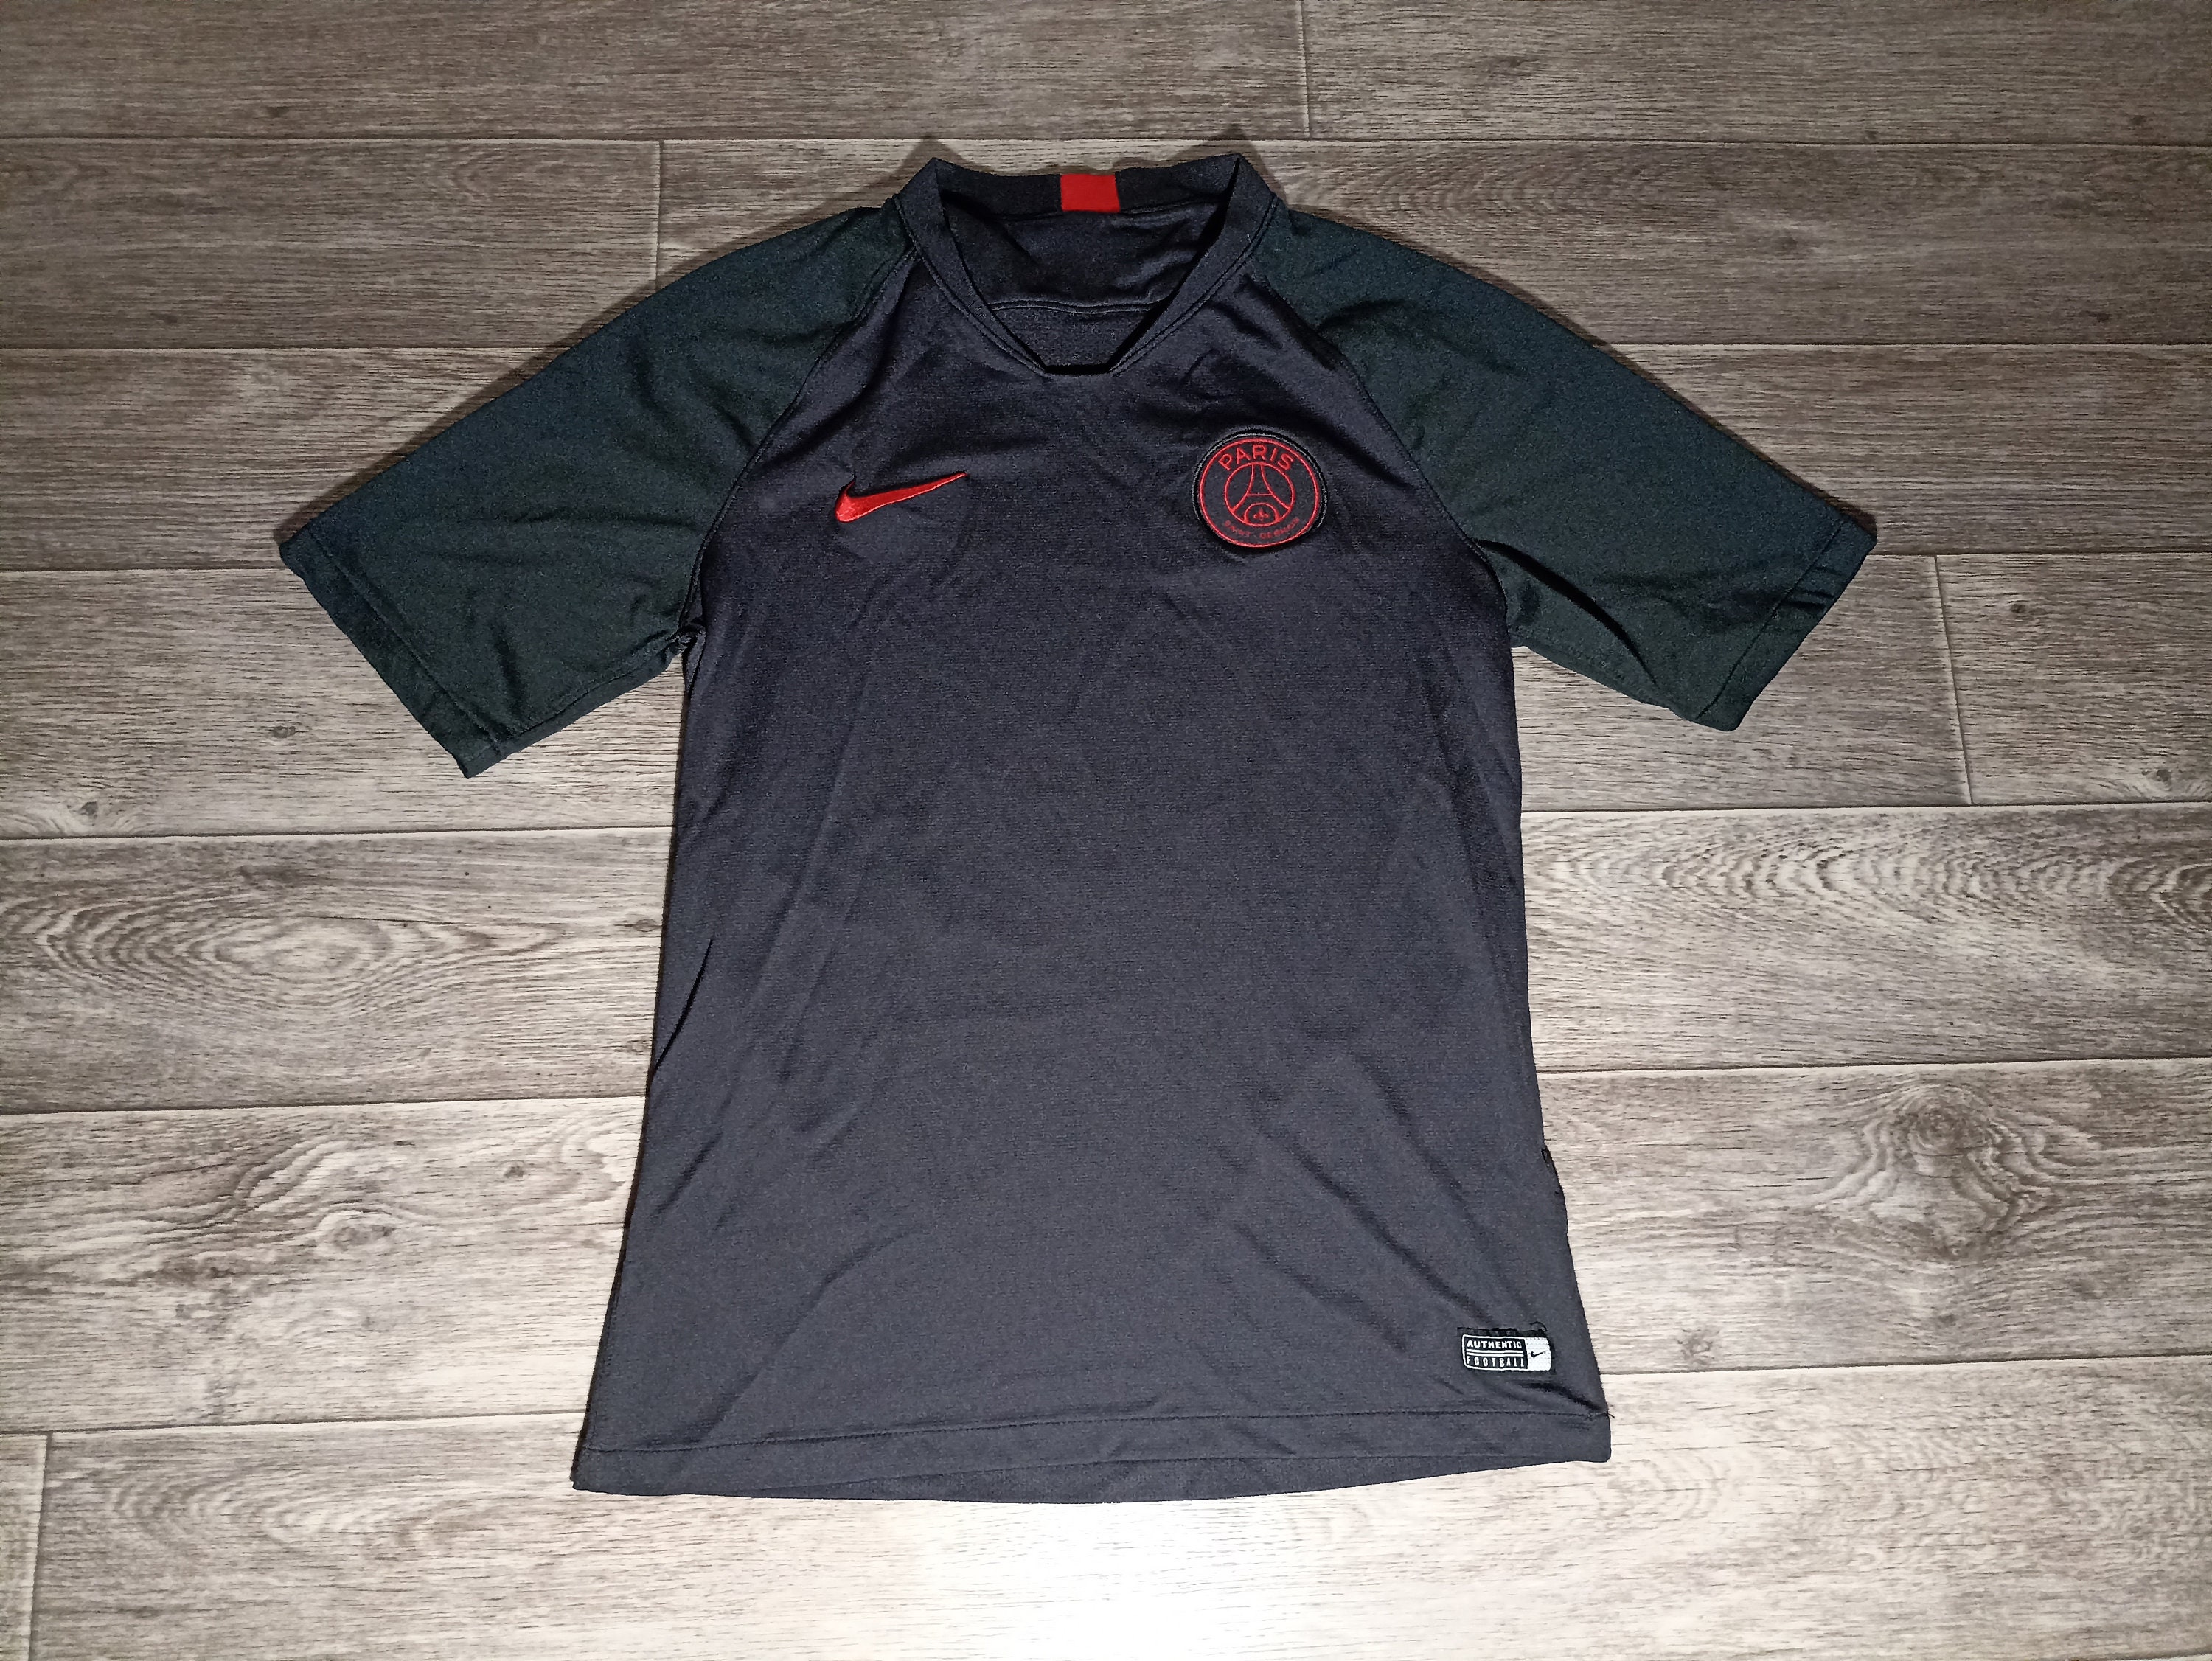 psg x nike 2005 soccer jersey condition 9//10 navy & red medium default//  see last slide r600